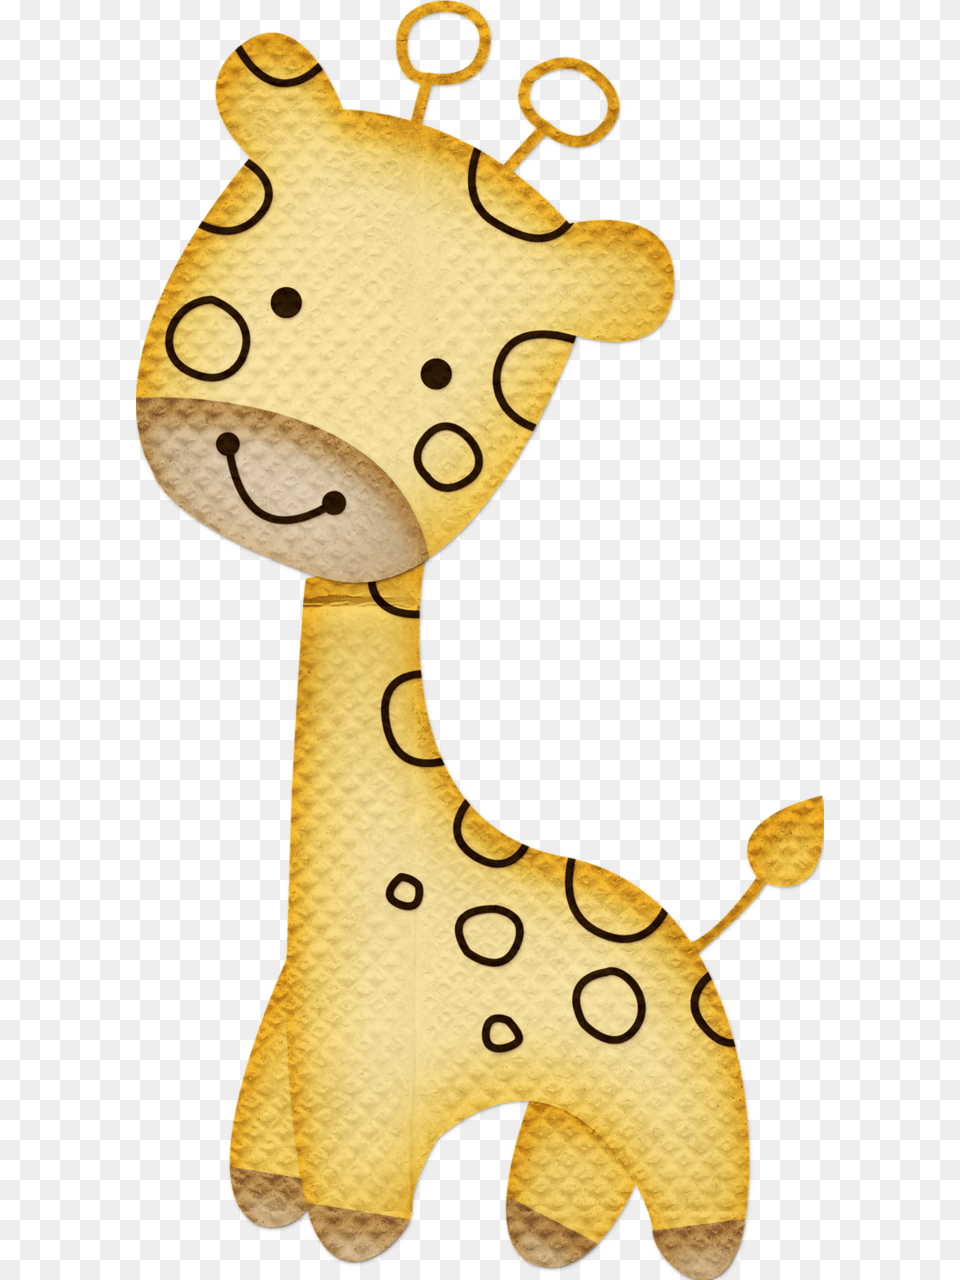 Co Dearzoo Girafa Zoos Clip Art Clip Art, Plush, Toy Png